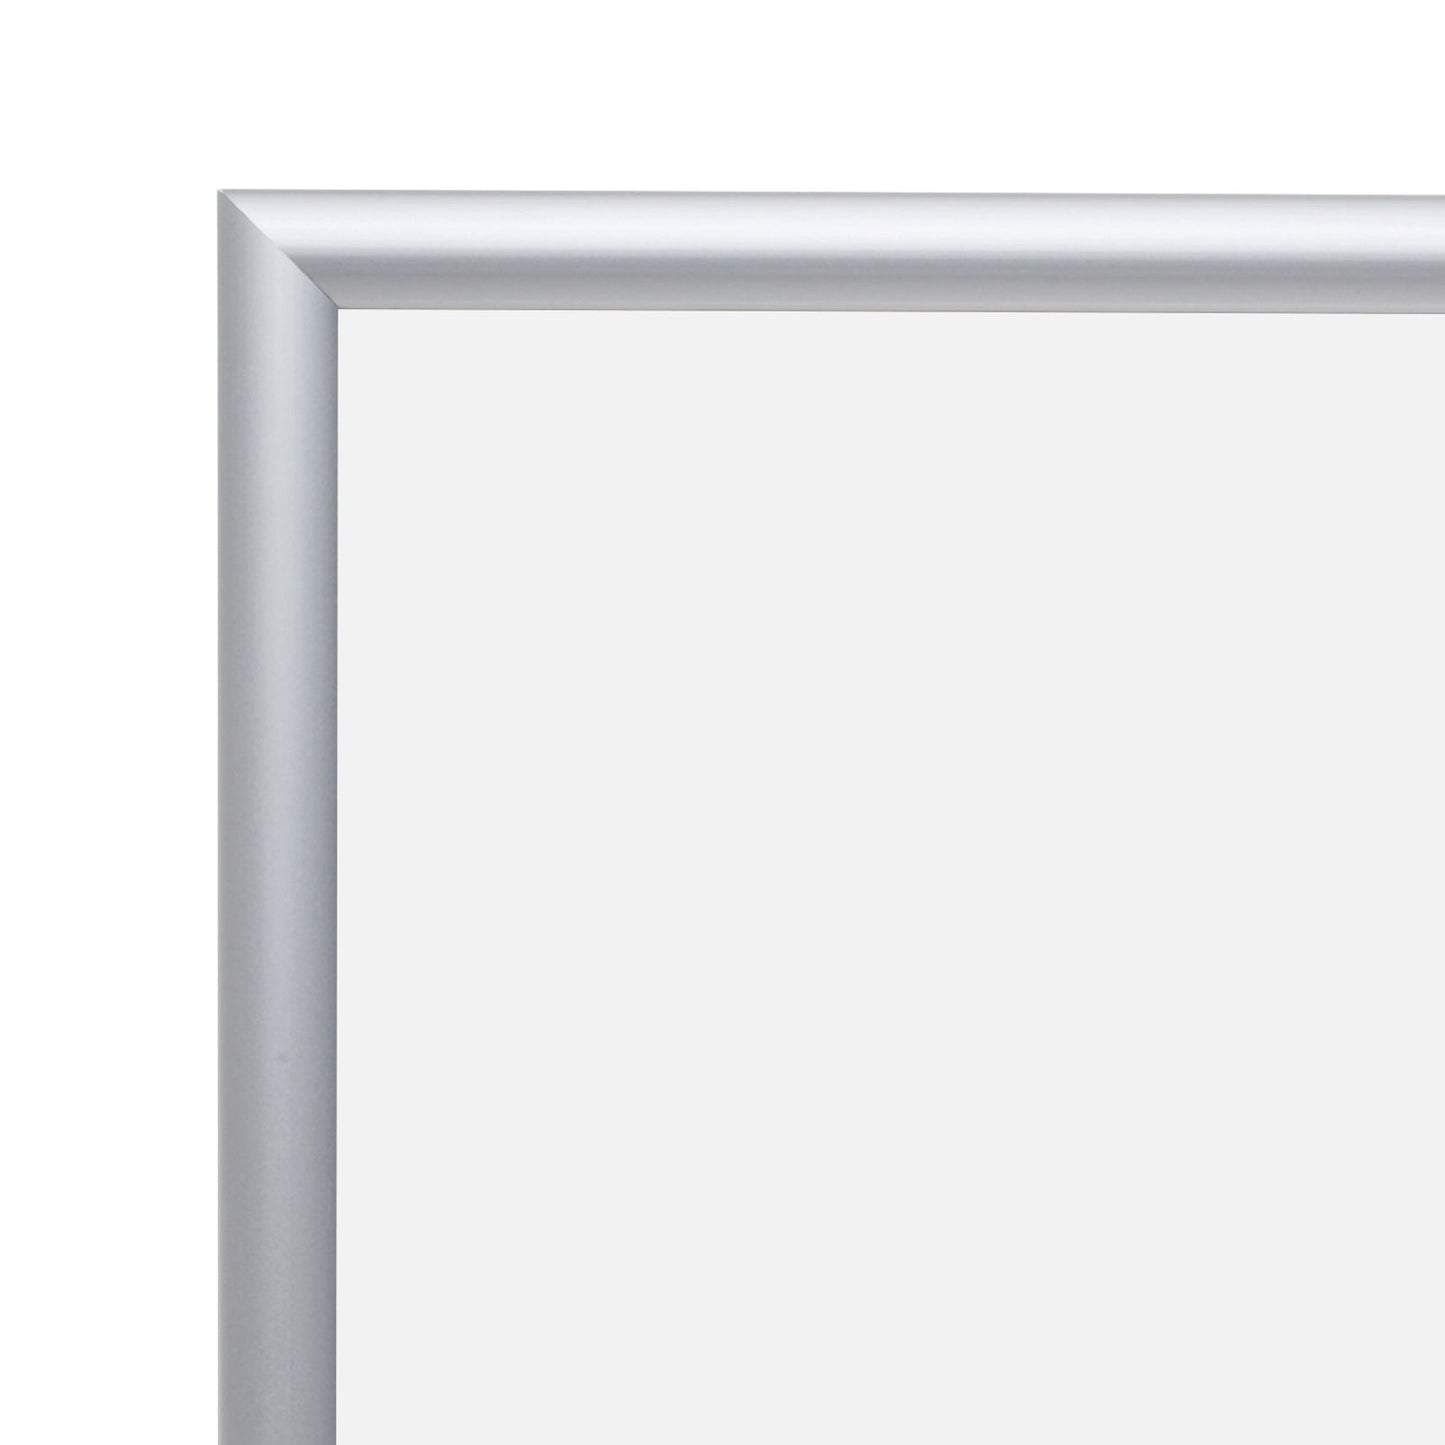 24x30 Silver SnapeZo® Snap Frame - 1" Profile